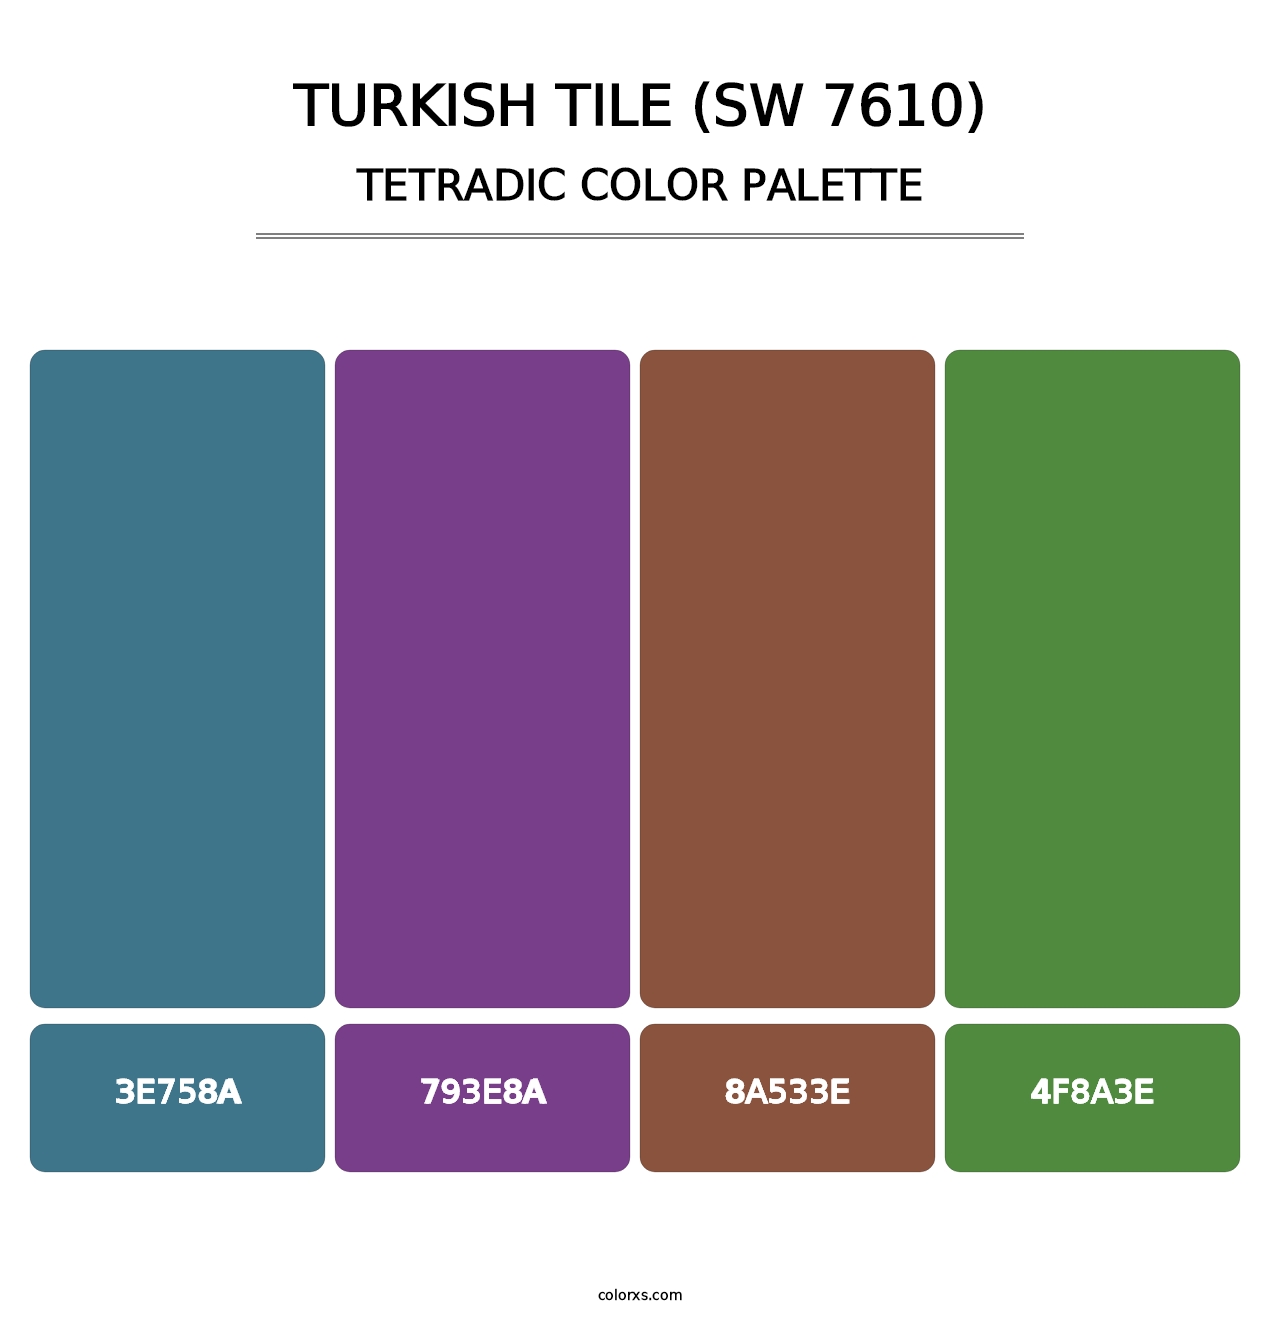 Turkish Tile (SW 7610) - Tetradic Color Palette